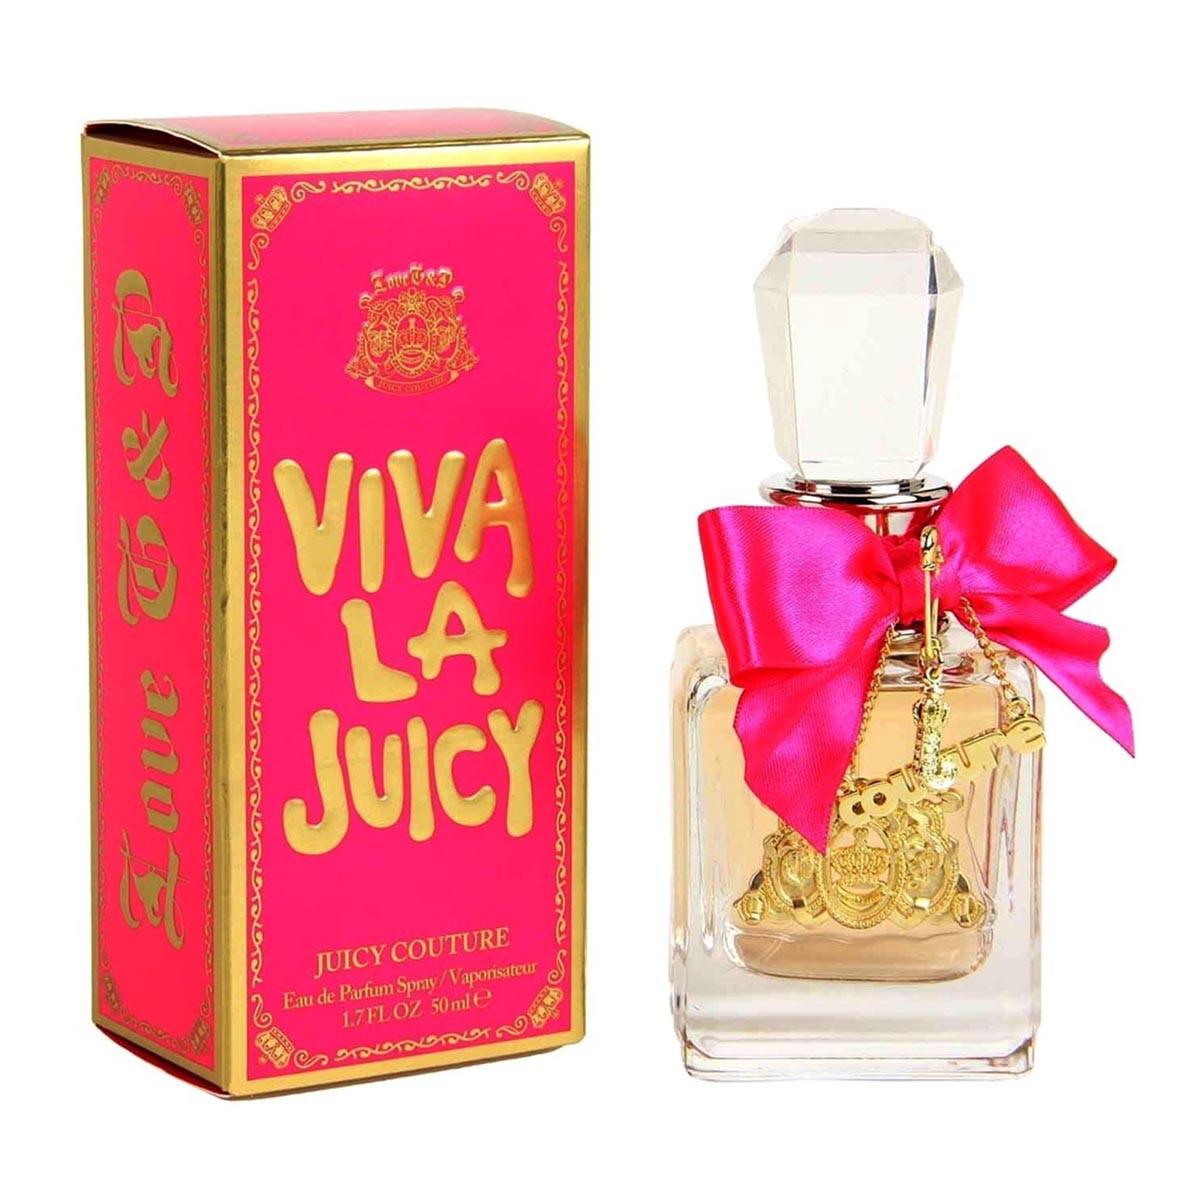 juicy-couture-perfum-viva-la-juicy-eau-de-parfum-50ml